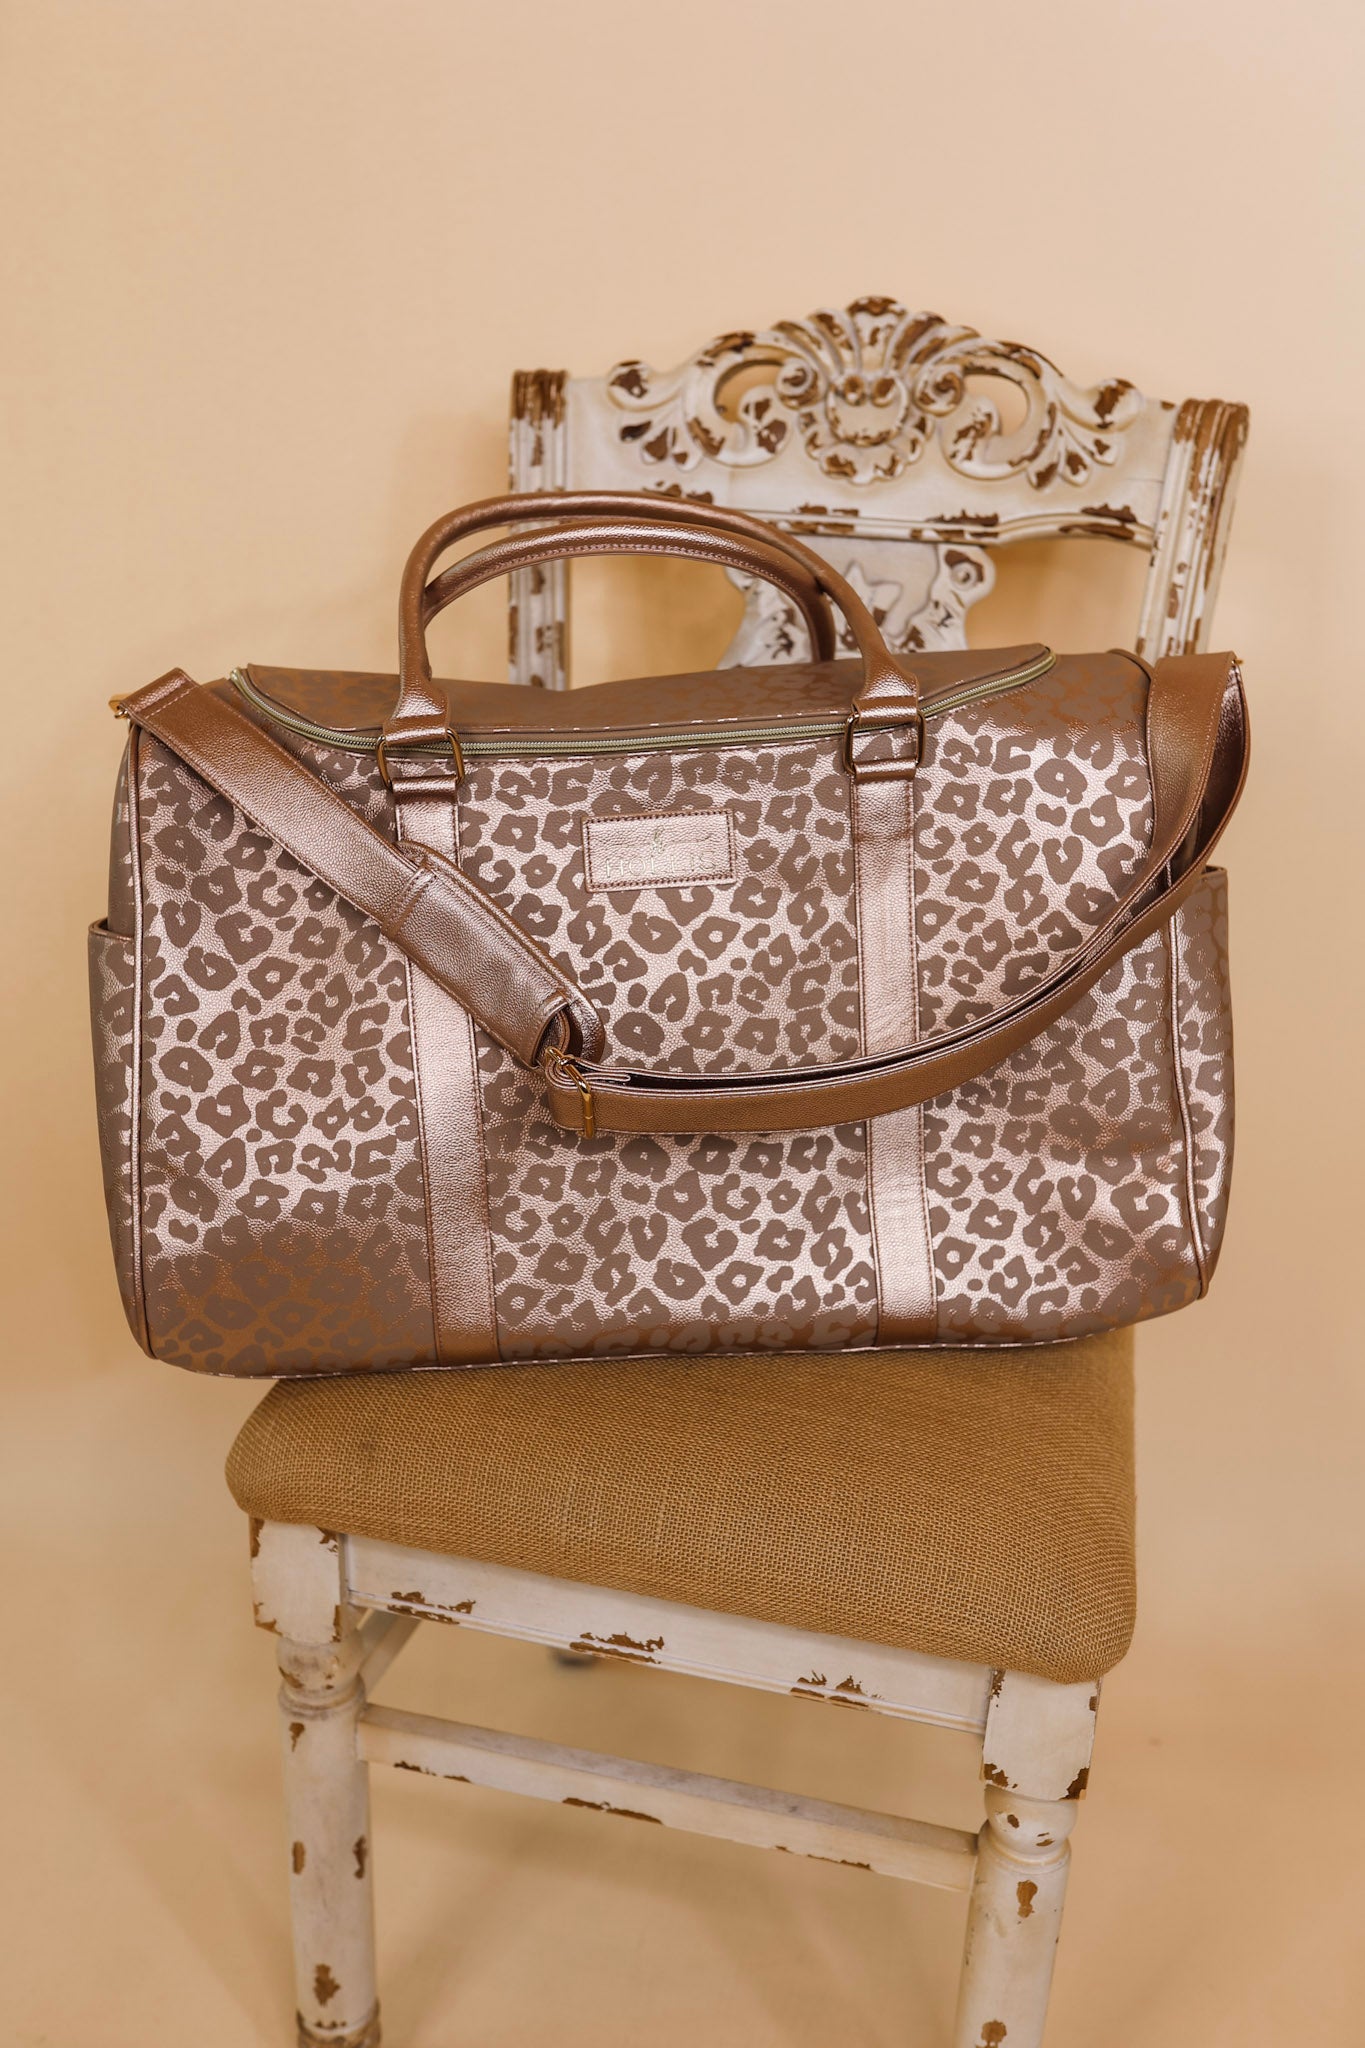 Hollis | Lux Weekender Bag in Leopard - Giddy Up Glamour Boutique